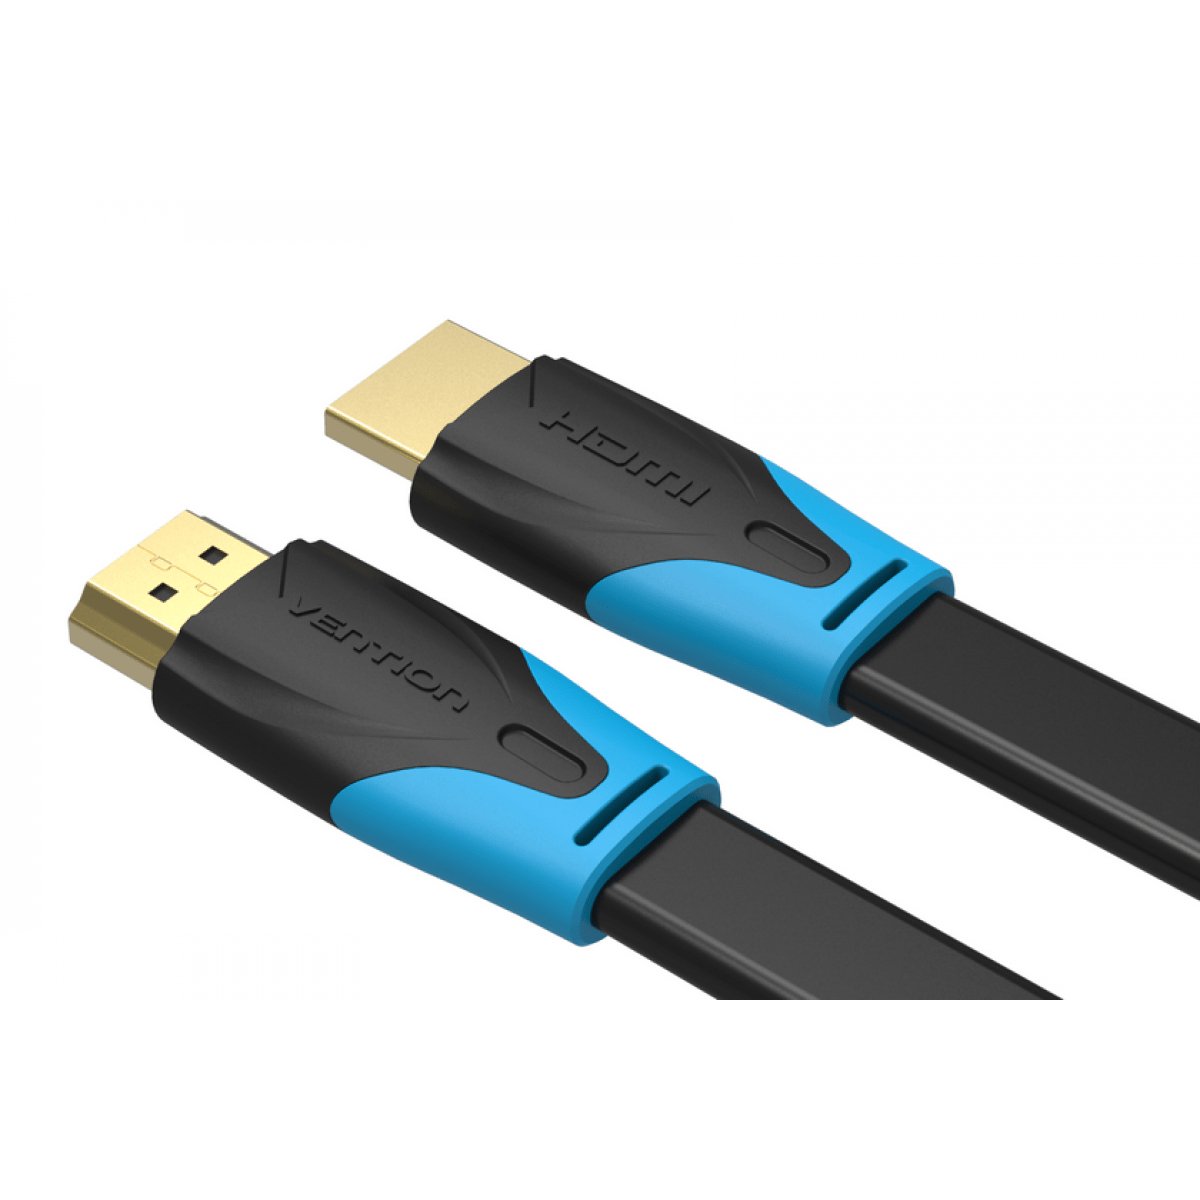 Vention Flat HDMI Cable 5M Black - Vertexhub Shop-vention